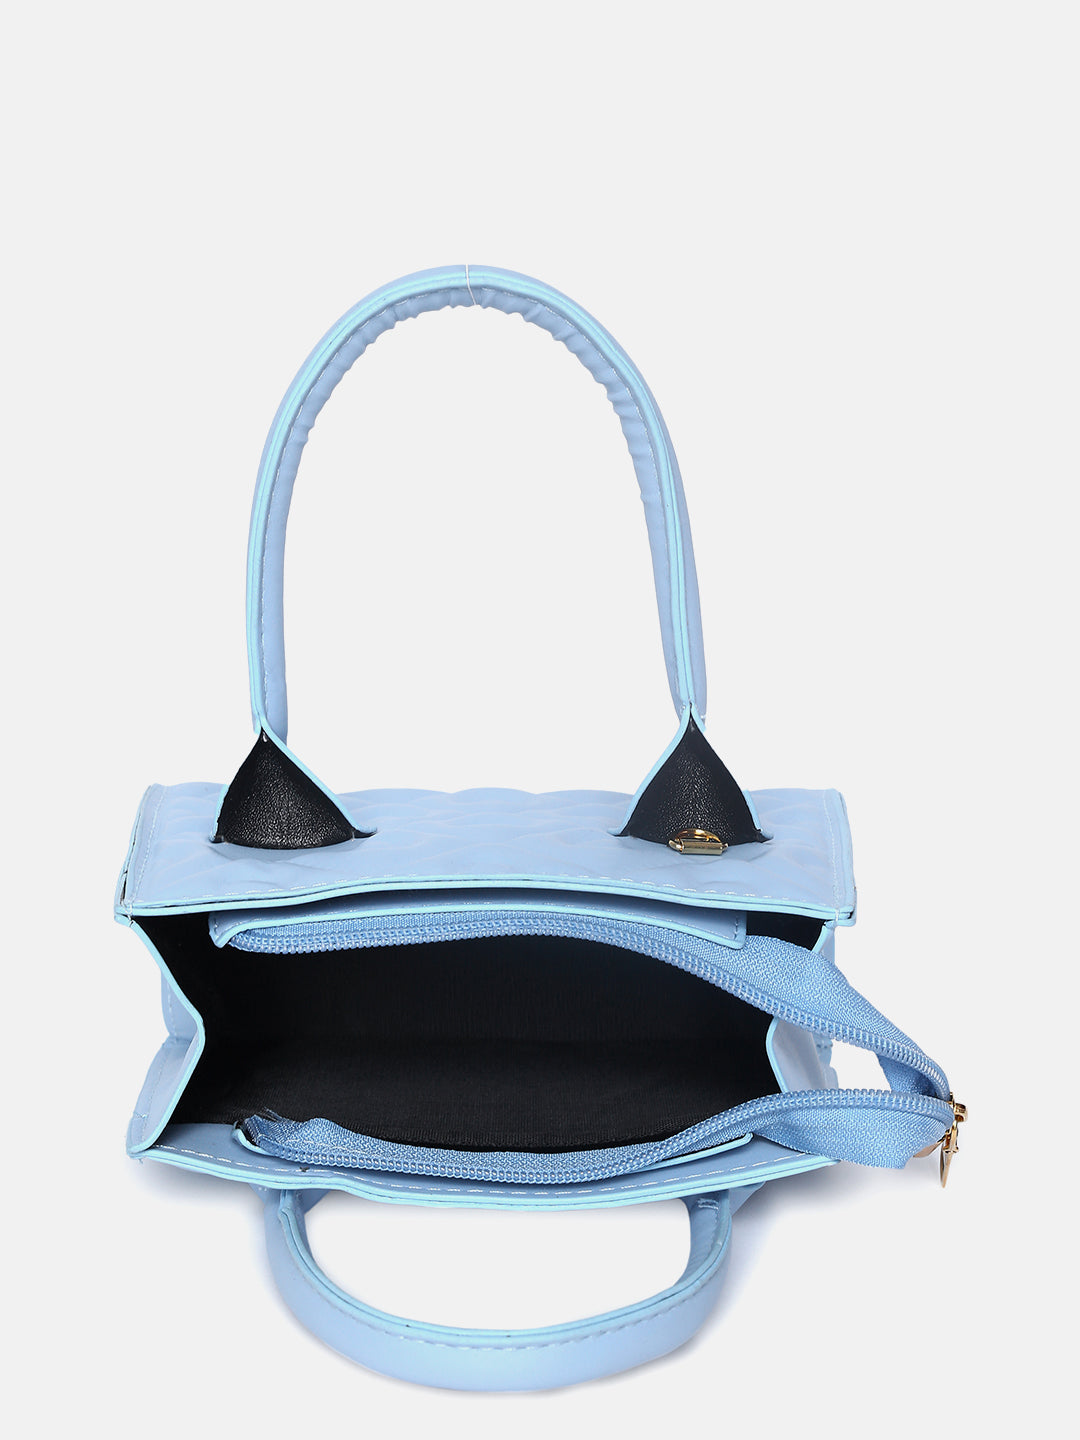 Rosemarie Pale Blue Mini Bag